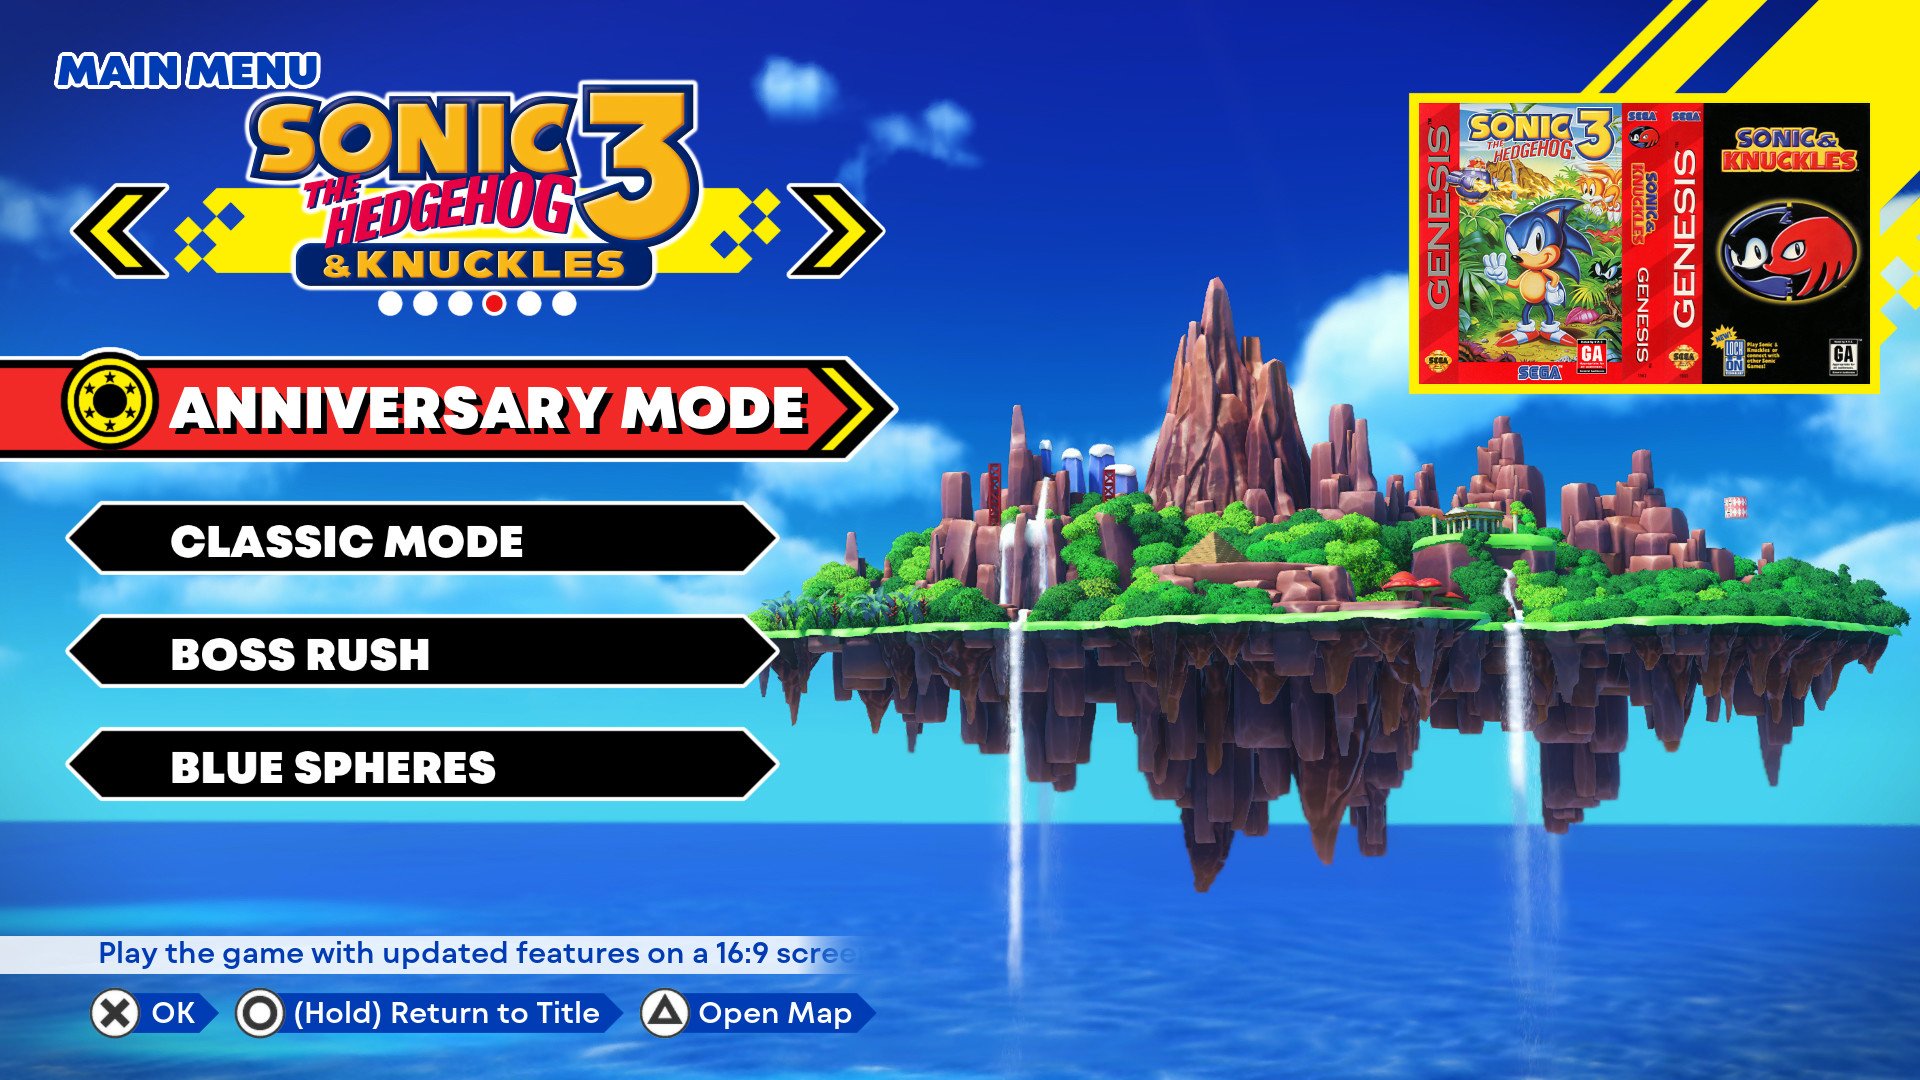 Sonic Origins Digital Deluxe Edition 3